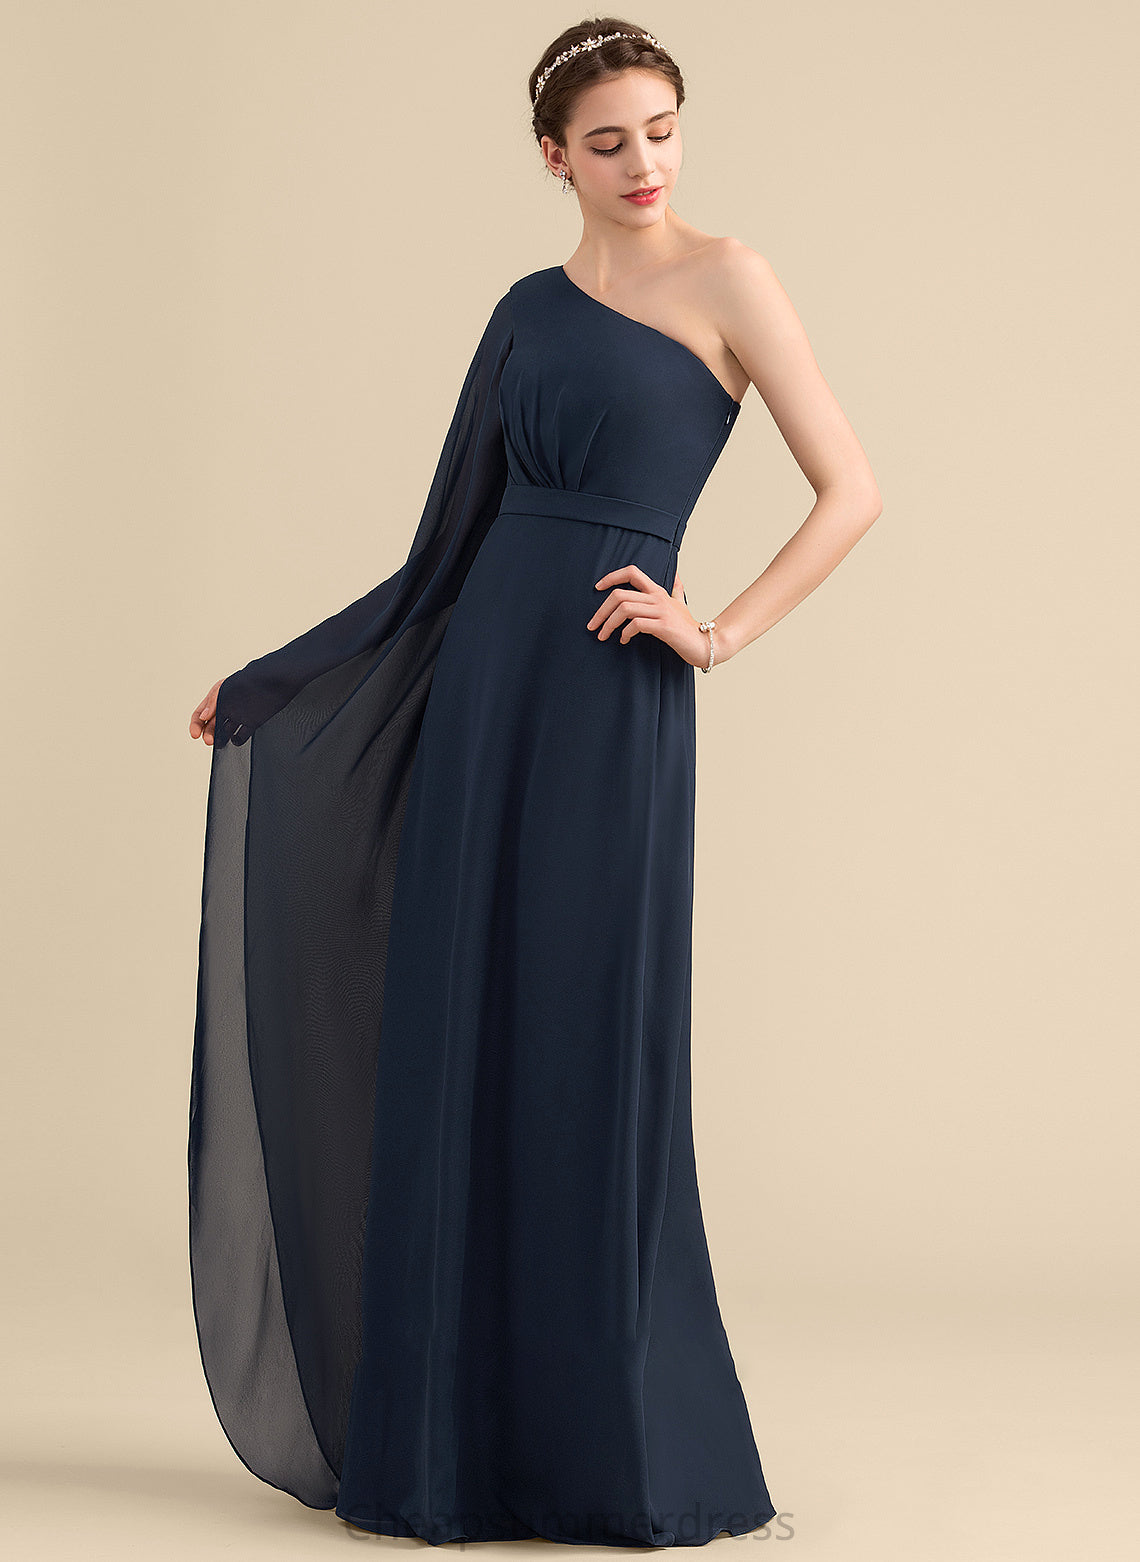 Embellishment Neckline Length Ruffle One-Shoulder Silhouette Floor-Length Fabric A-Line Arely Natural Waist A-Line/Princess